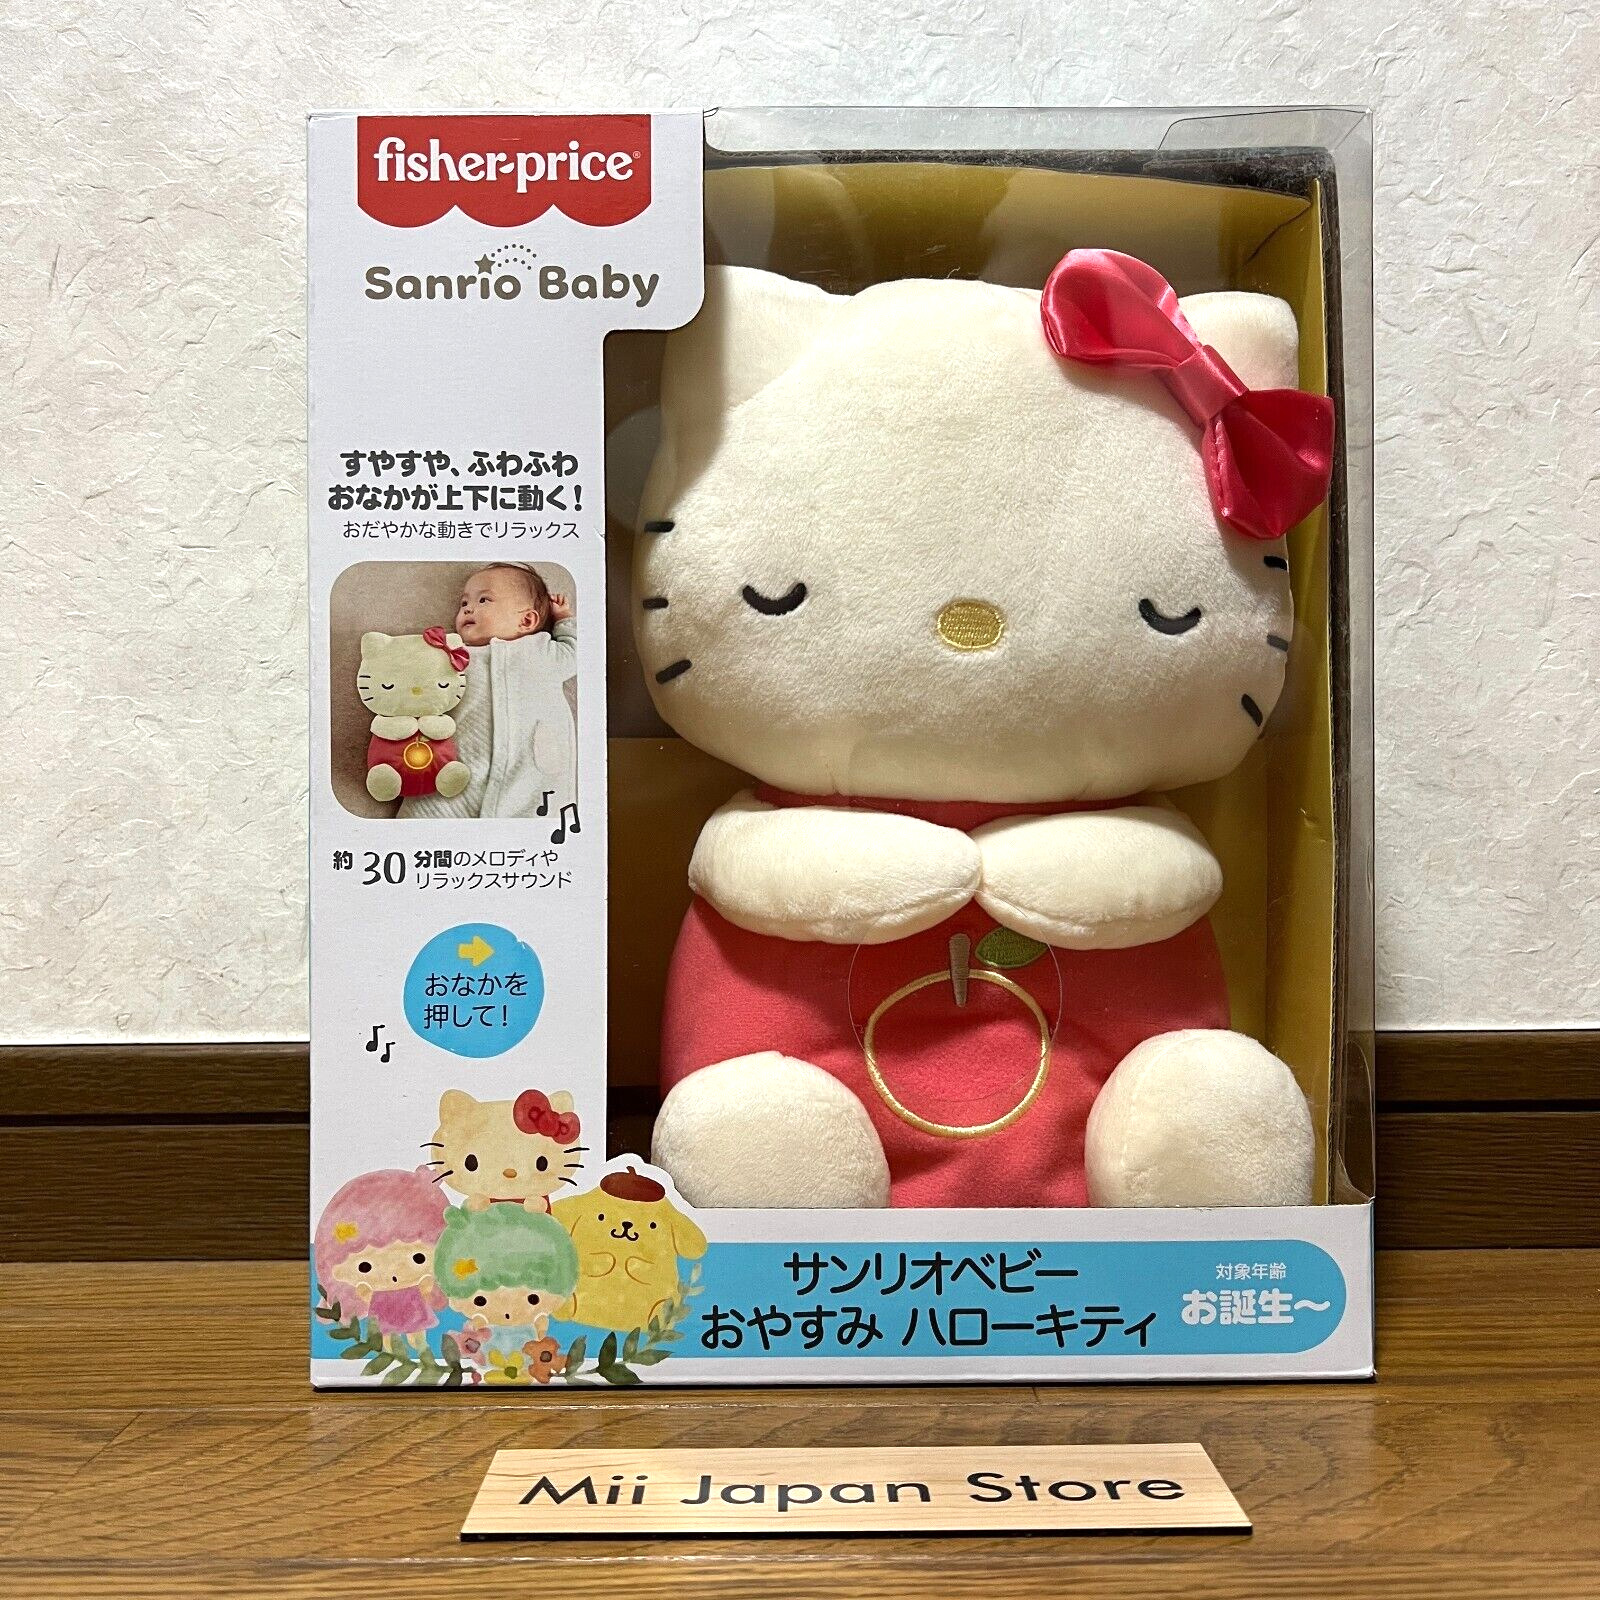 Sanrio Baby Hello Kitty Good Night Plush Doll Fisher Price Sleeping Toys Used